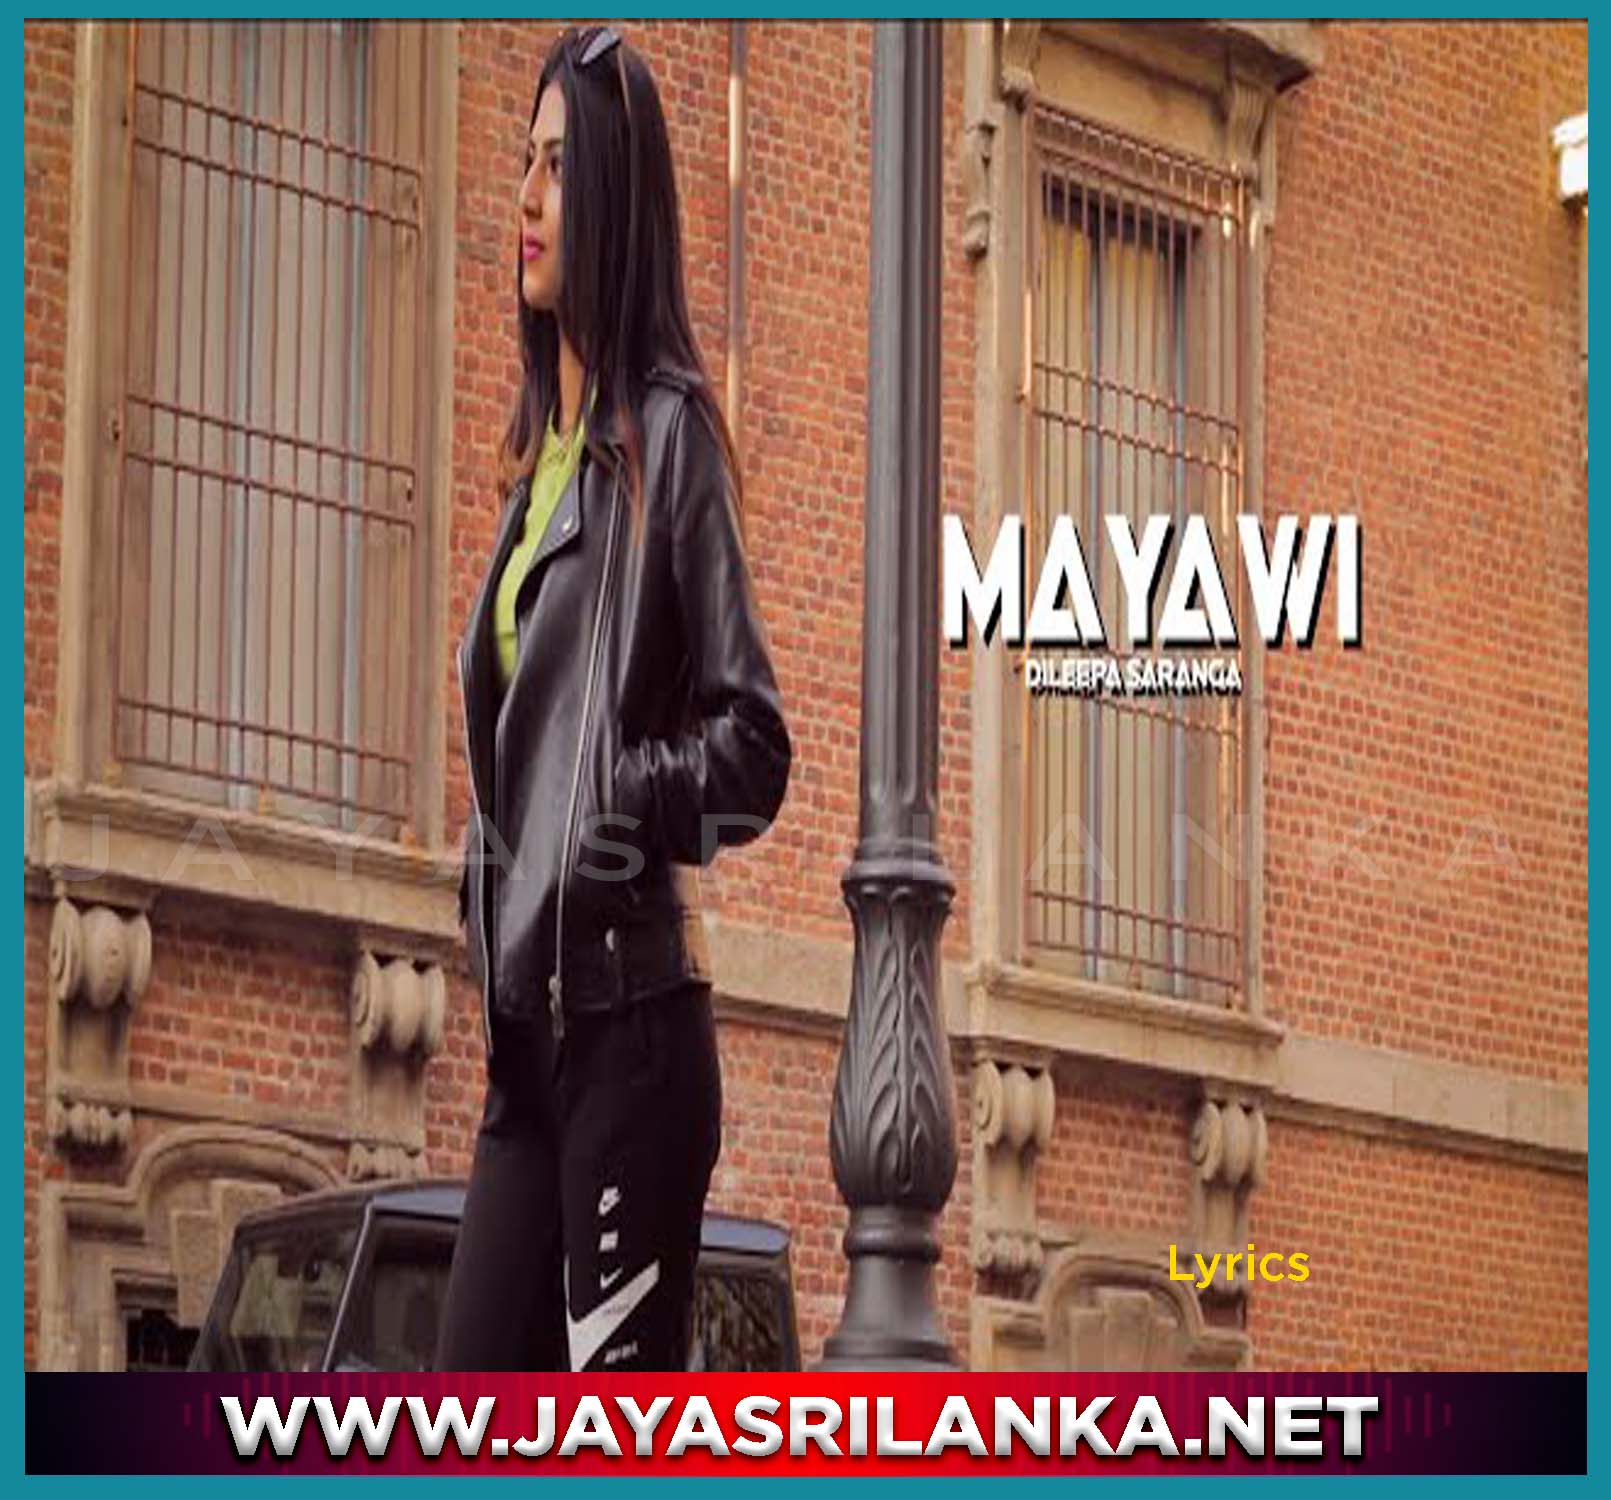 Mayawi (Ya Ali Sinhala Cover)